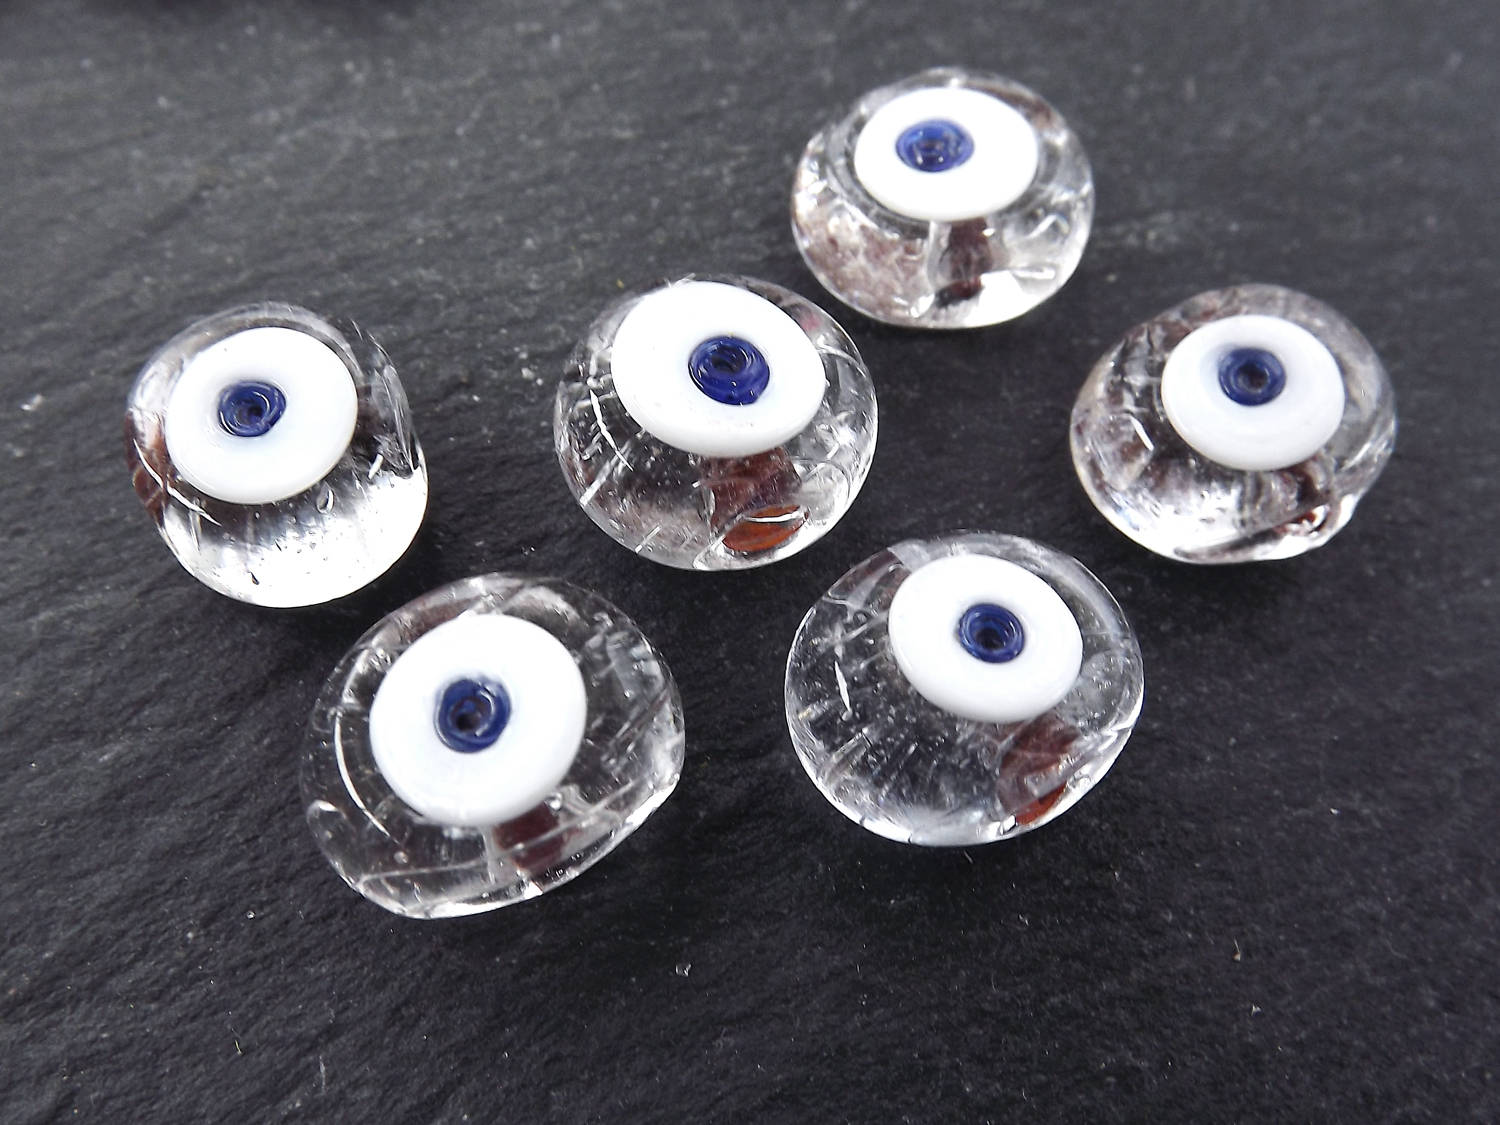 Clear Evil Eye, Evil Eye Beads, Evil Eye Bead, Turkish Evil Eye, Clear Glass Bead, Artisan, Greek Eye, Handmade, Nazar, Turkish, 16mm, 6pc